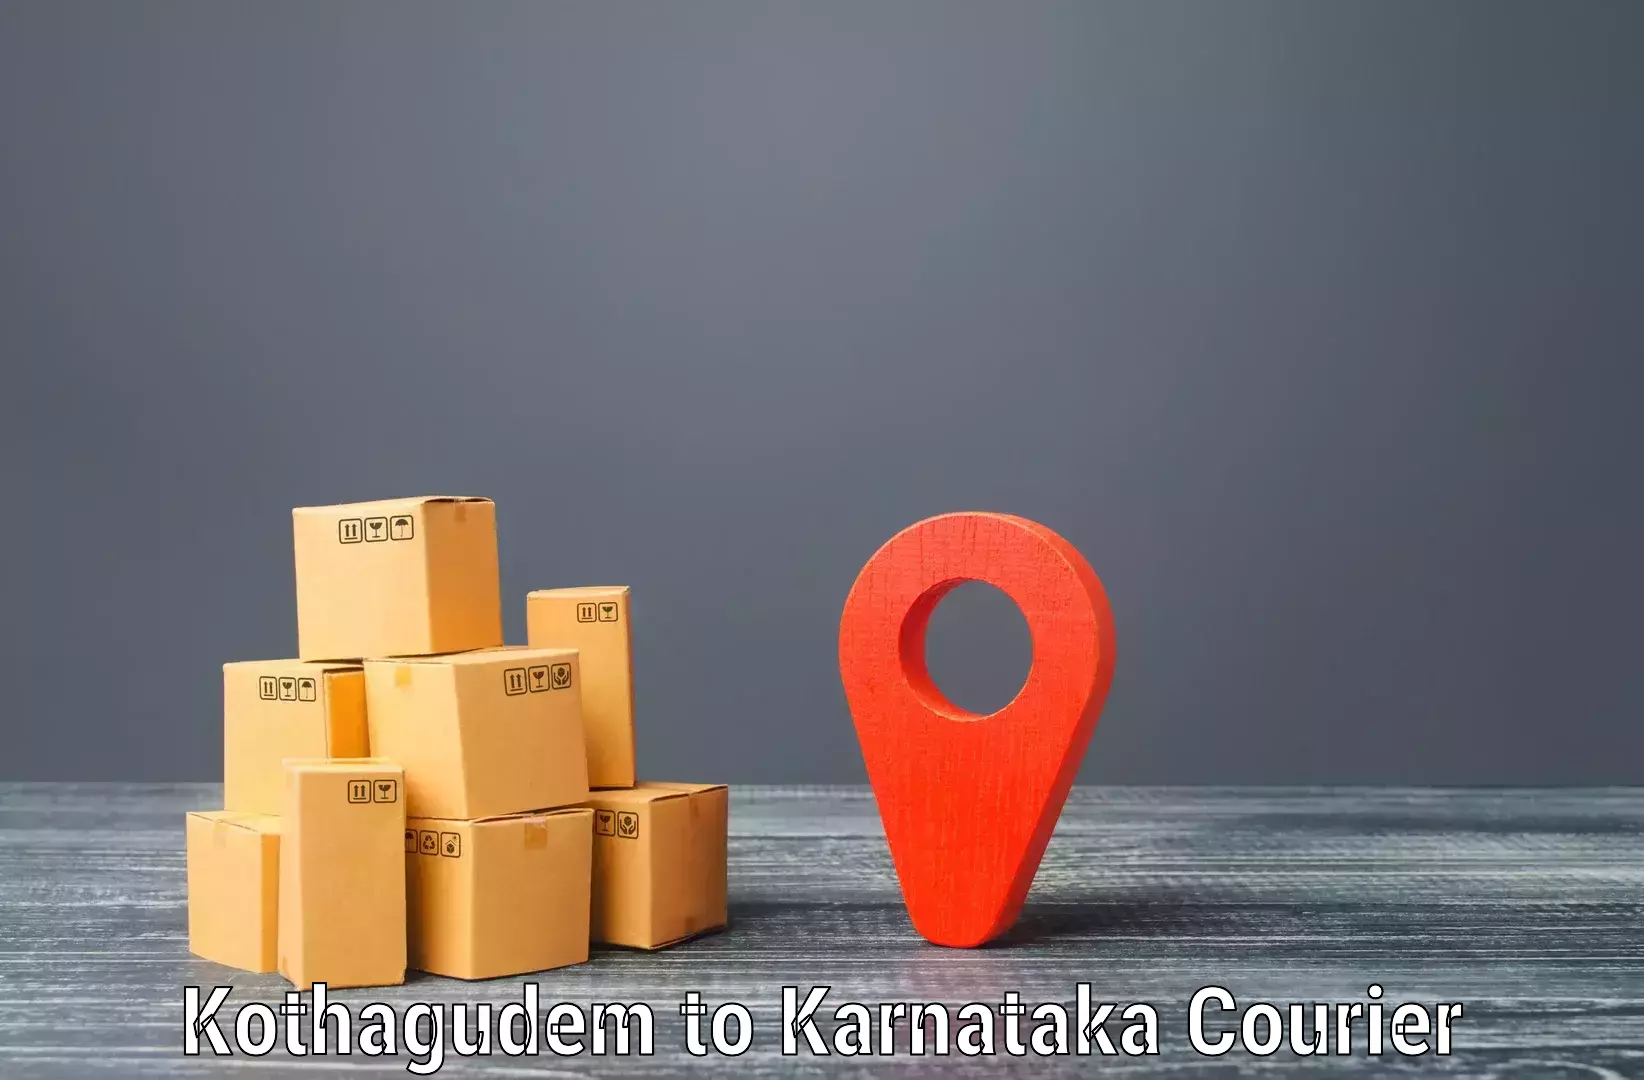 On-demand shipping options Kothagudem to Uttara Kannada